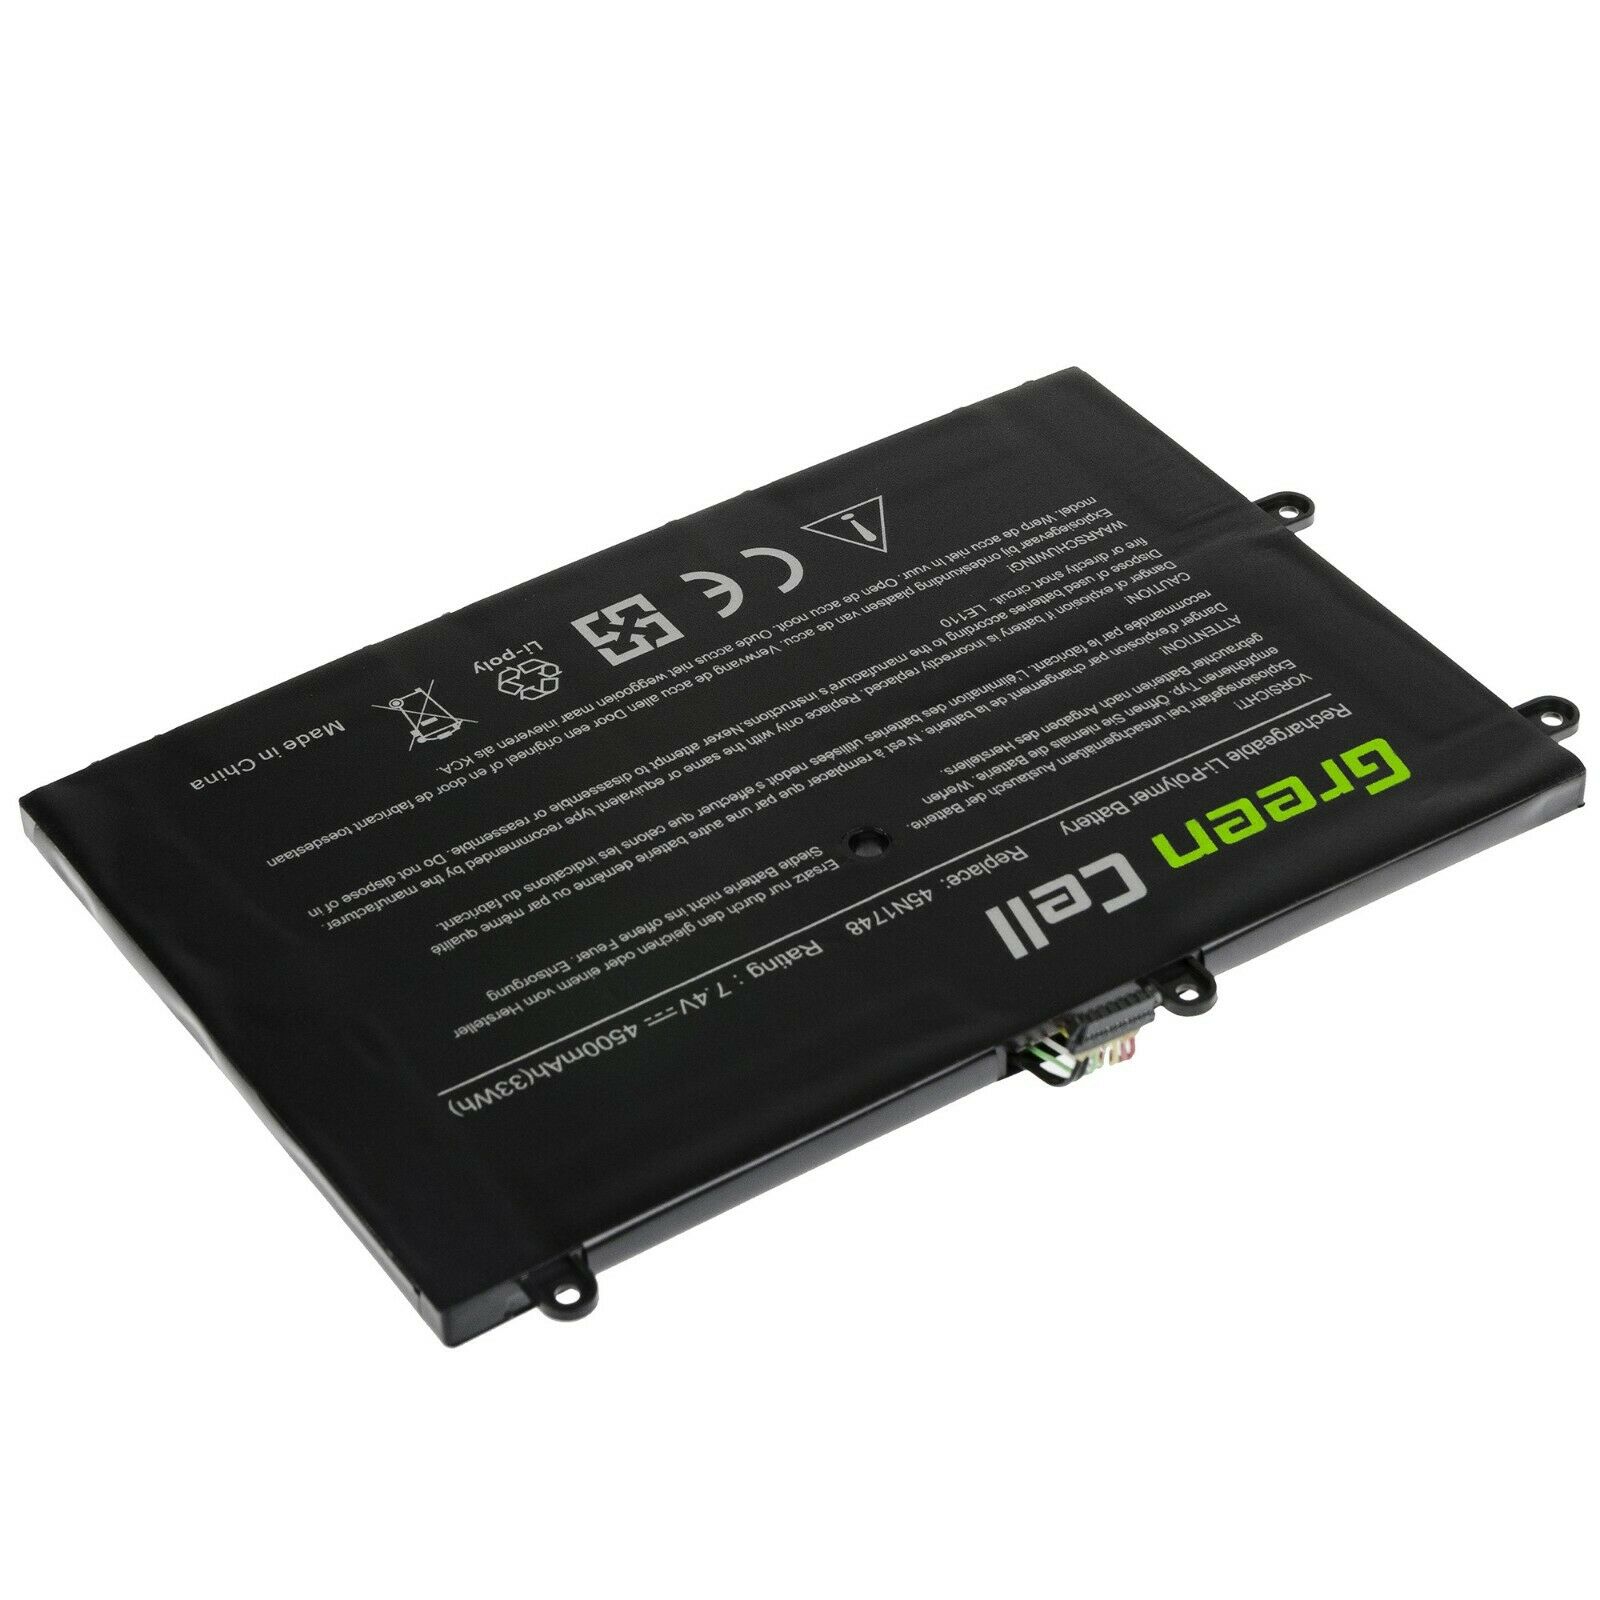 Lenovo 11e (20G9/20GB),Yoga 11e Chromebook Series,45N1748,45N1749 batteria compatibile